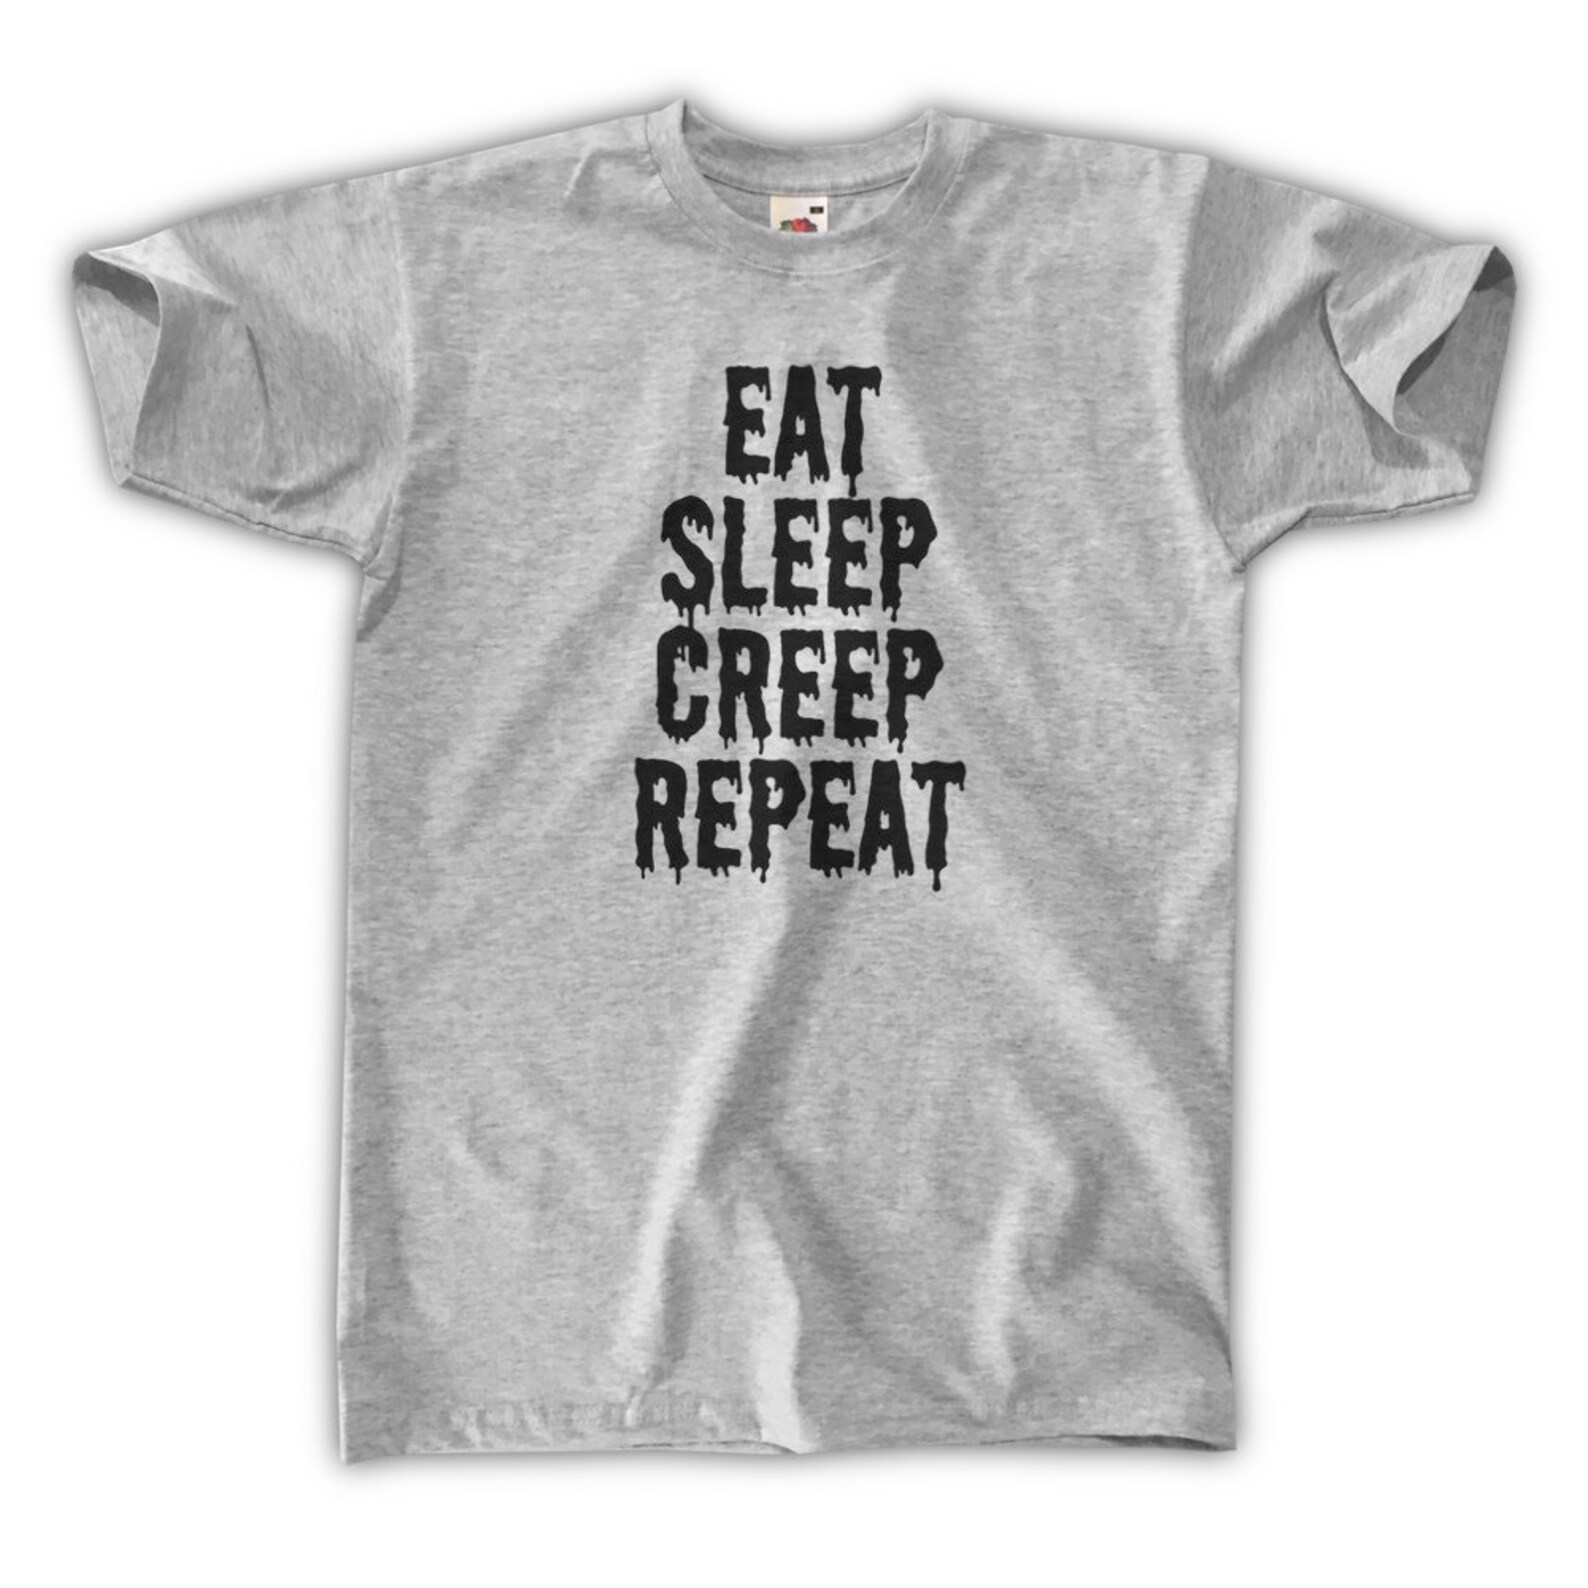 Eat Sleep Creep Repeat T-Shirt Unisex / Mens S M L XL | Etsy